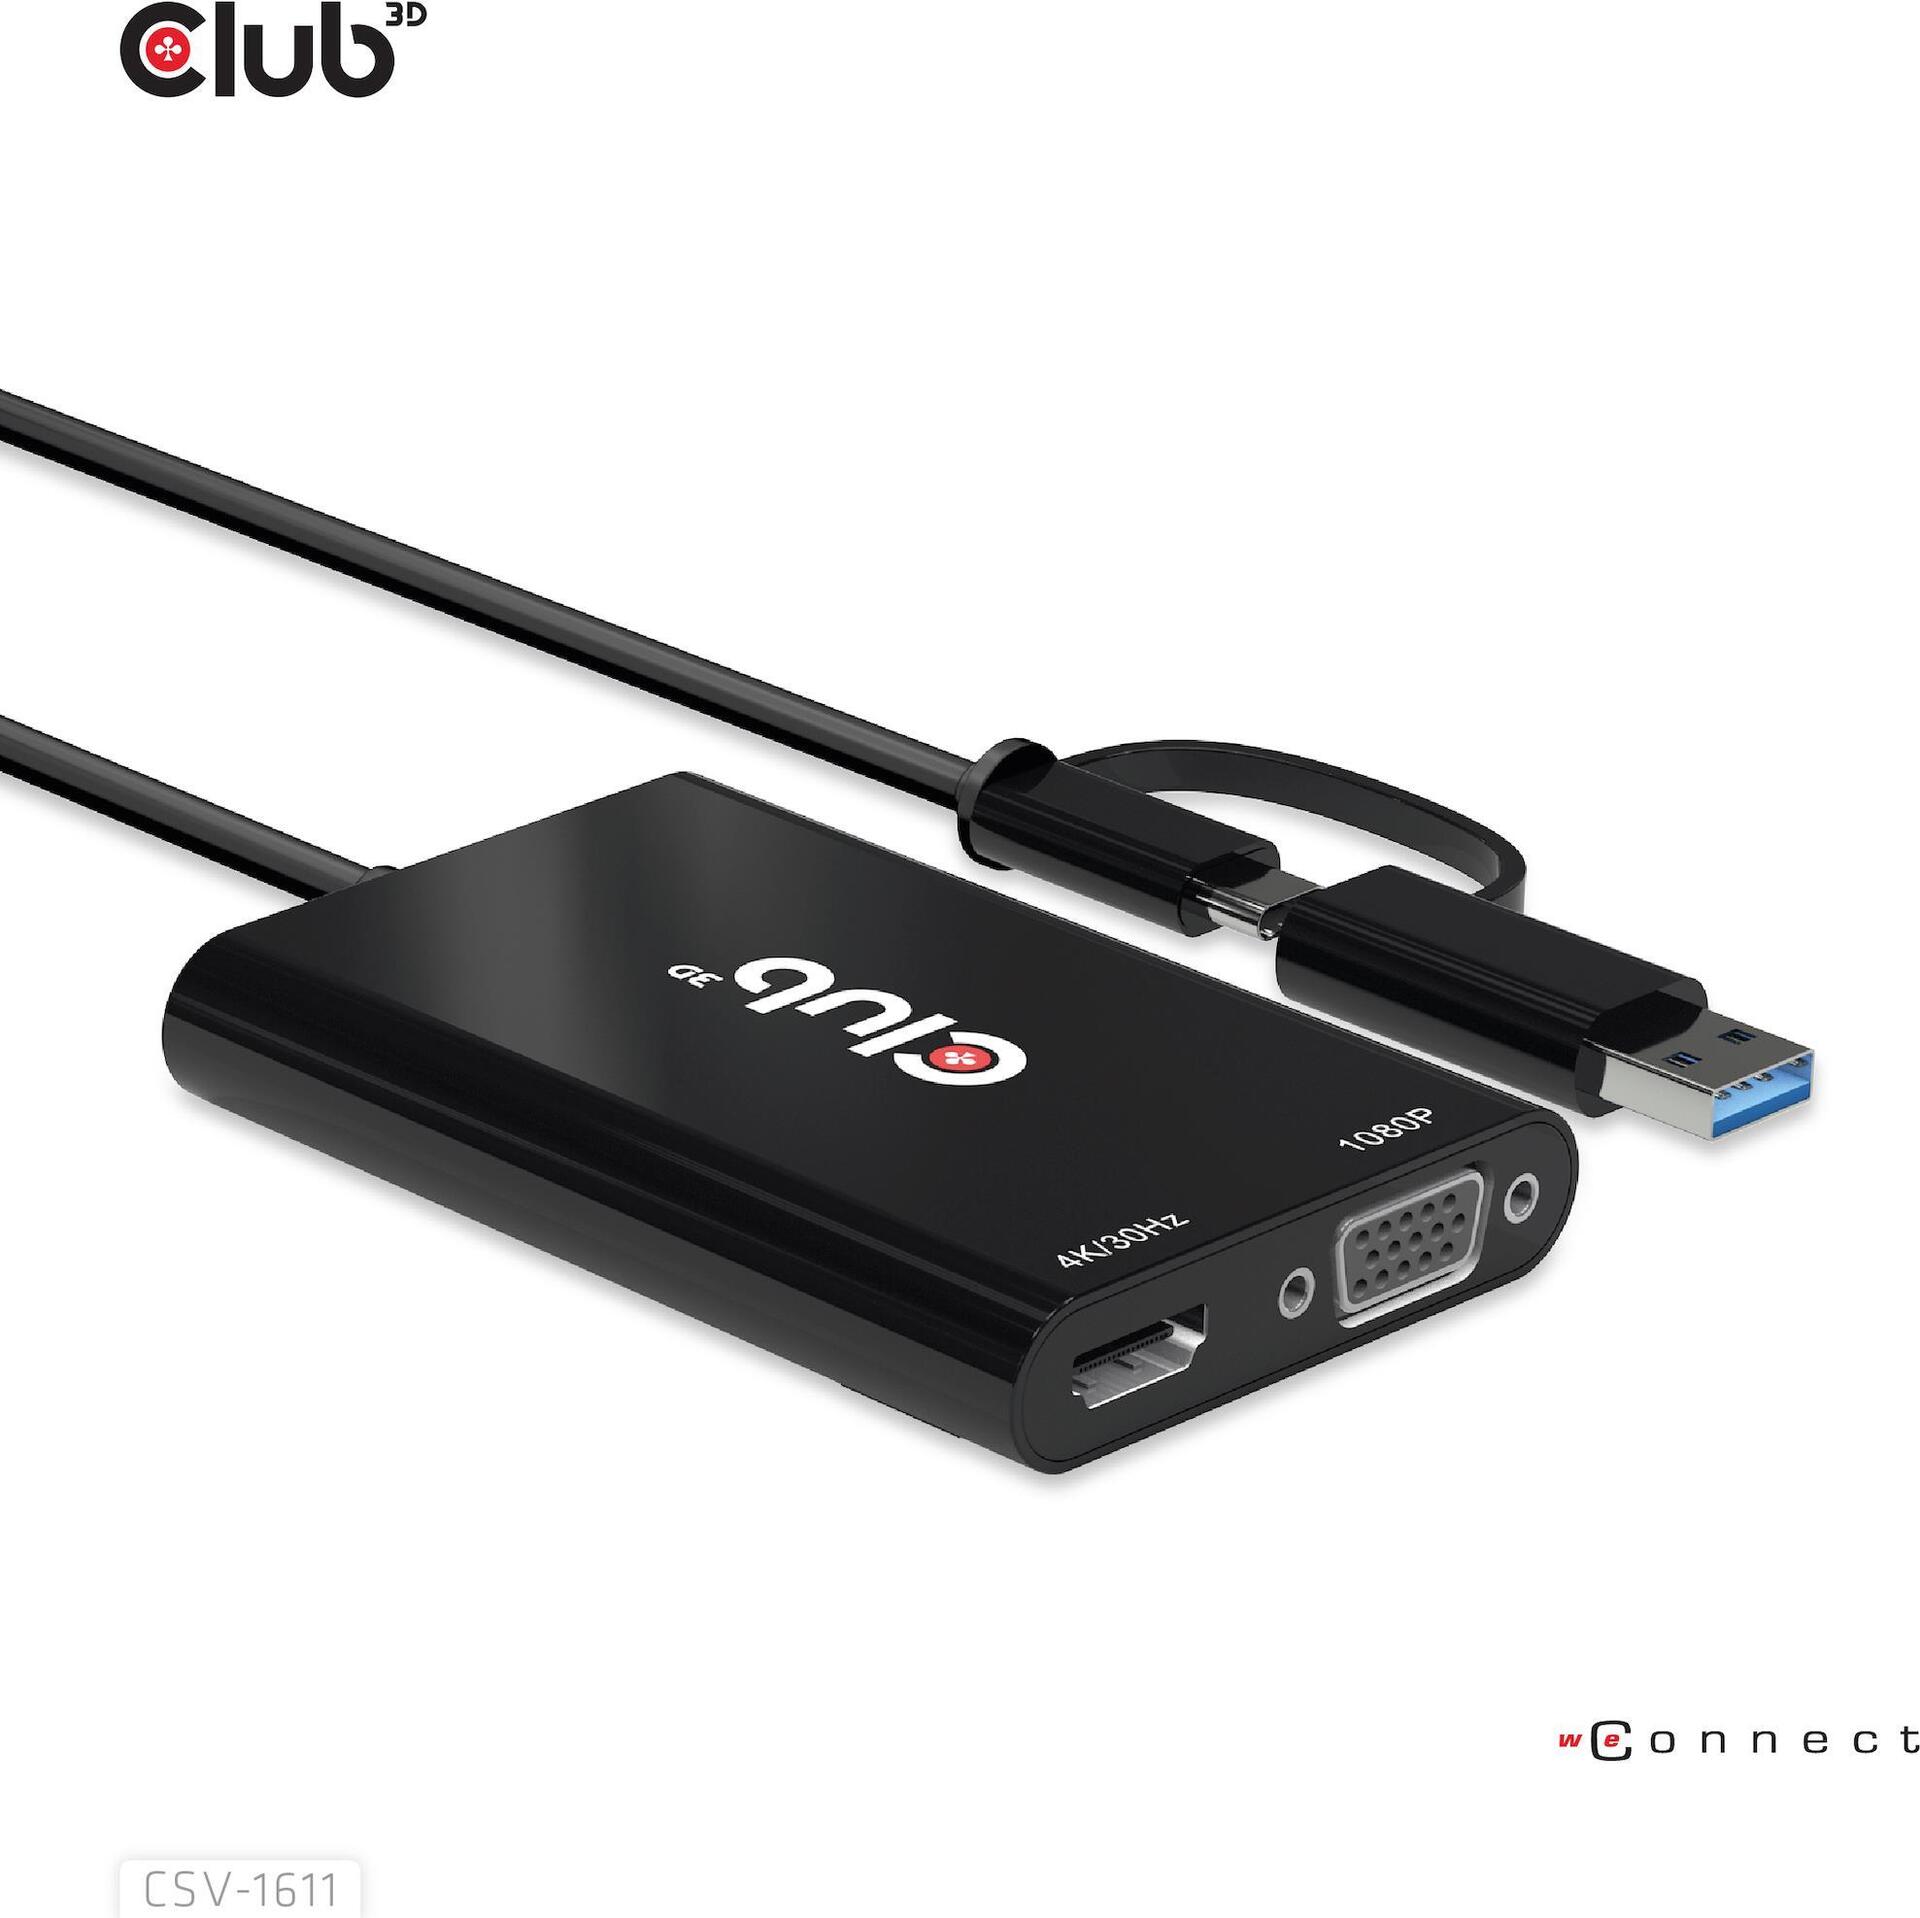 Club 3D Videoadapter (CSV-1611)